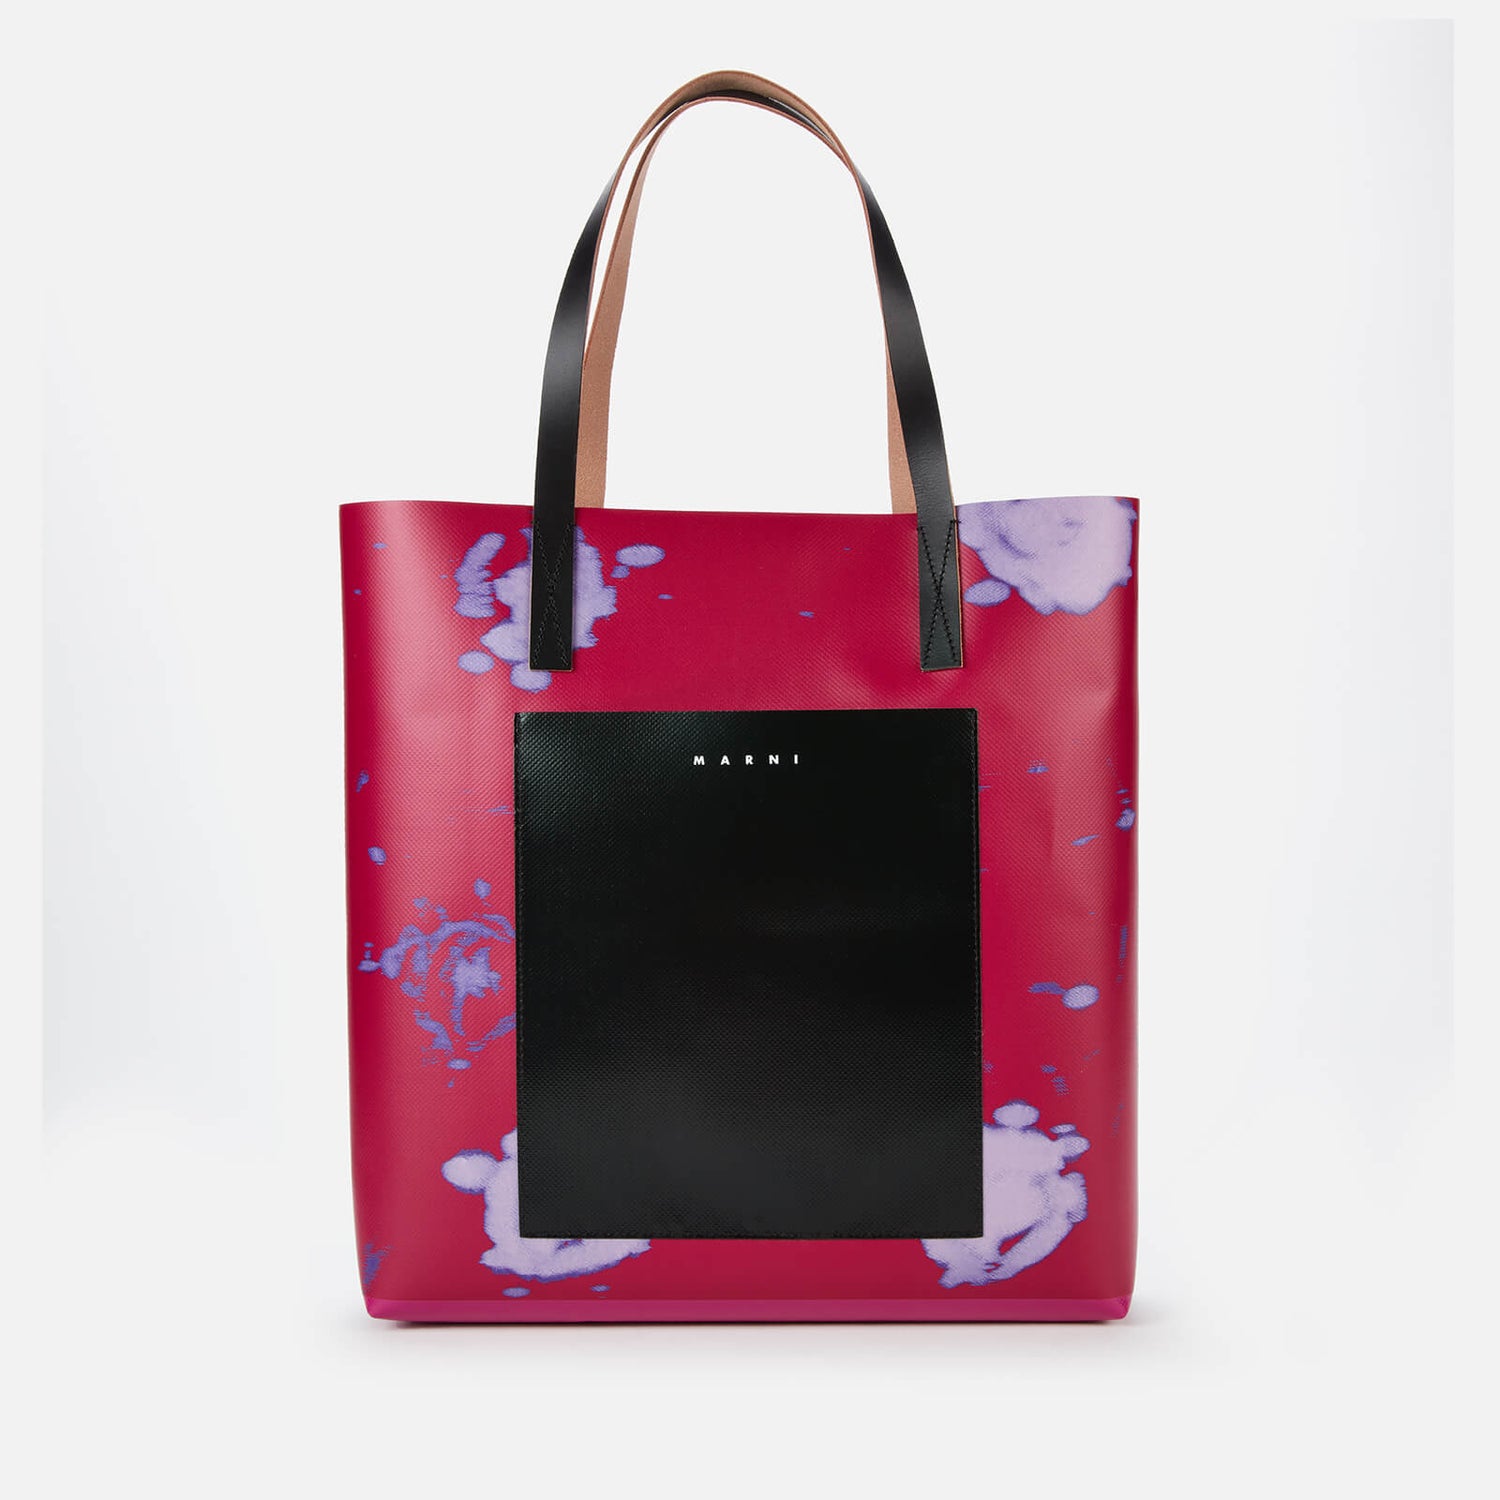 Marni Women's Pvc Faded Roses Bag - Raspberry/Black